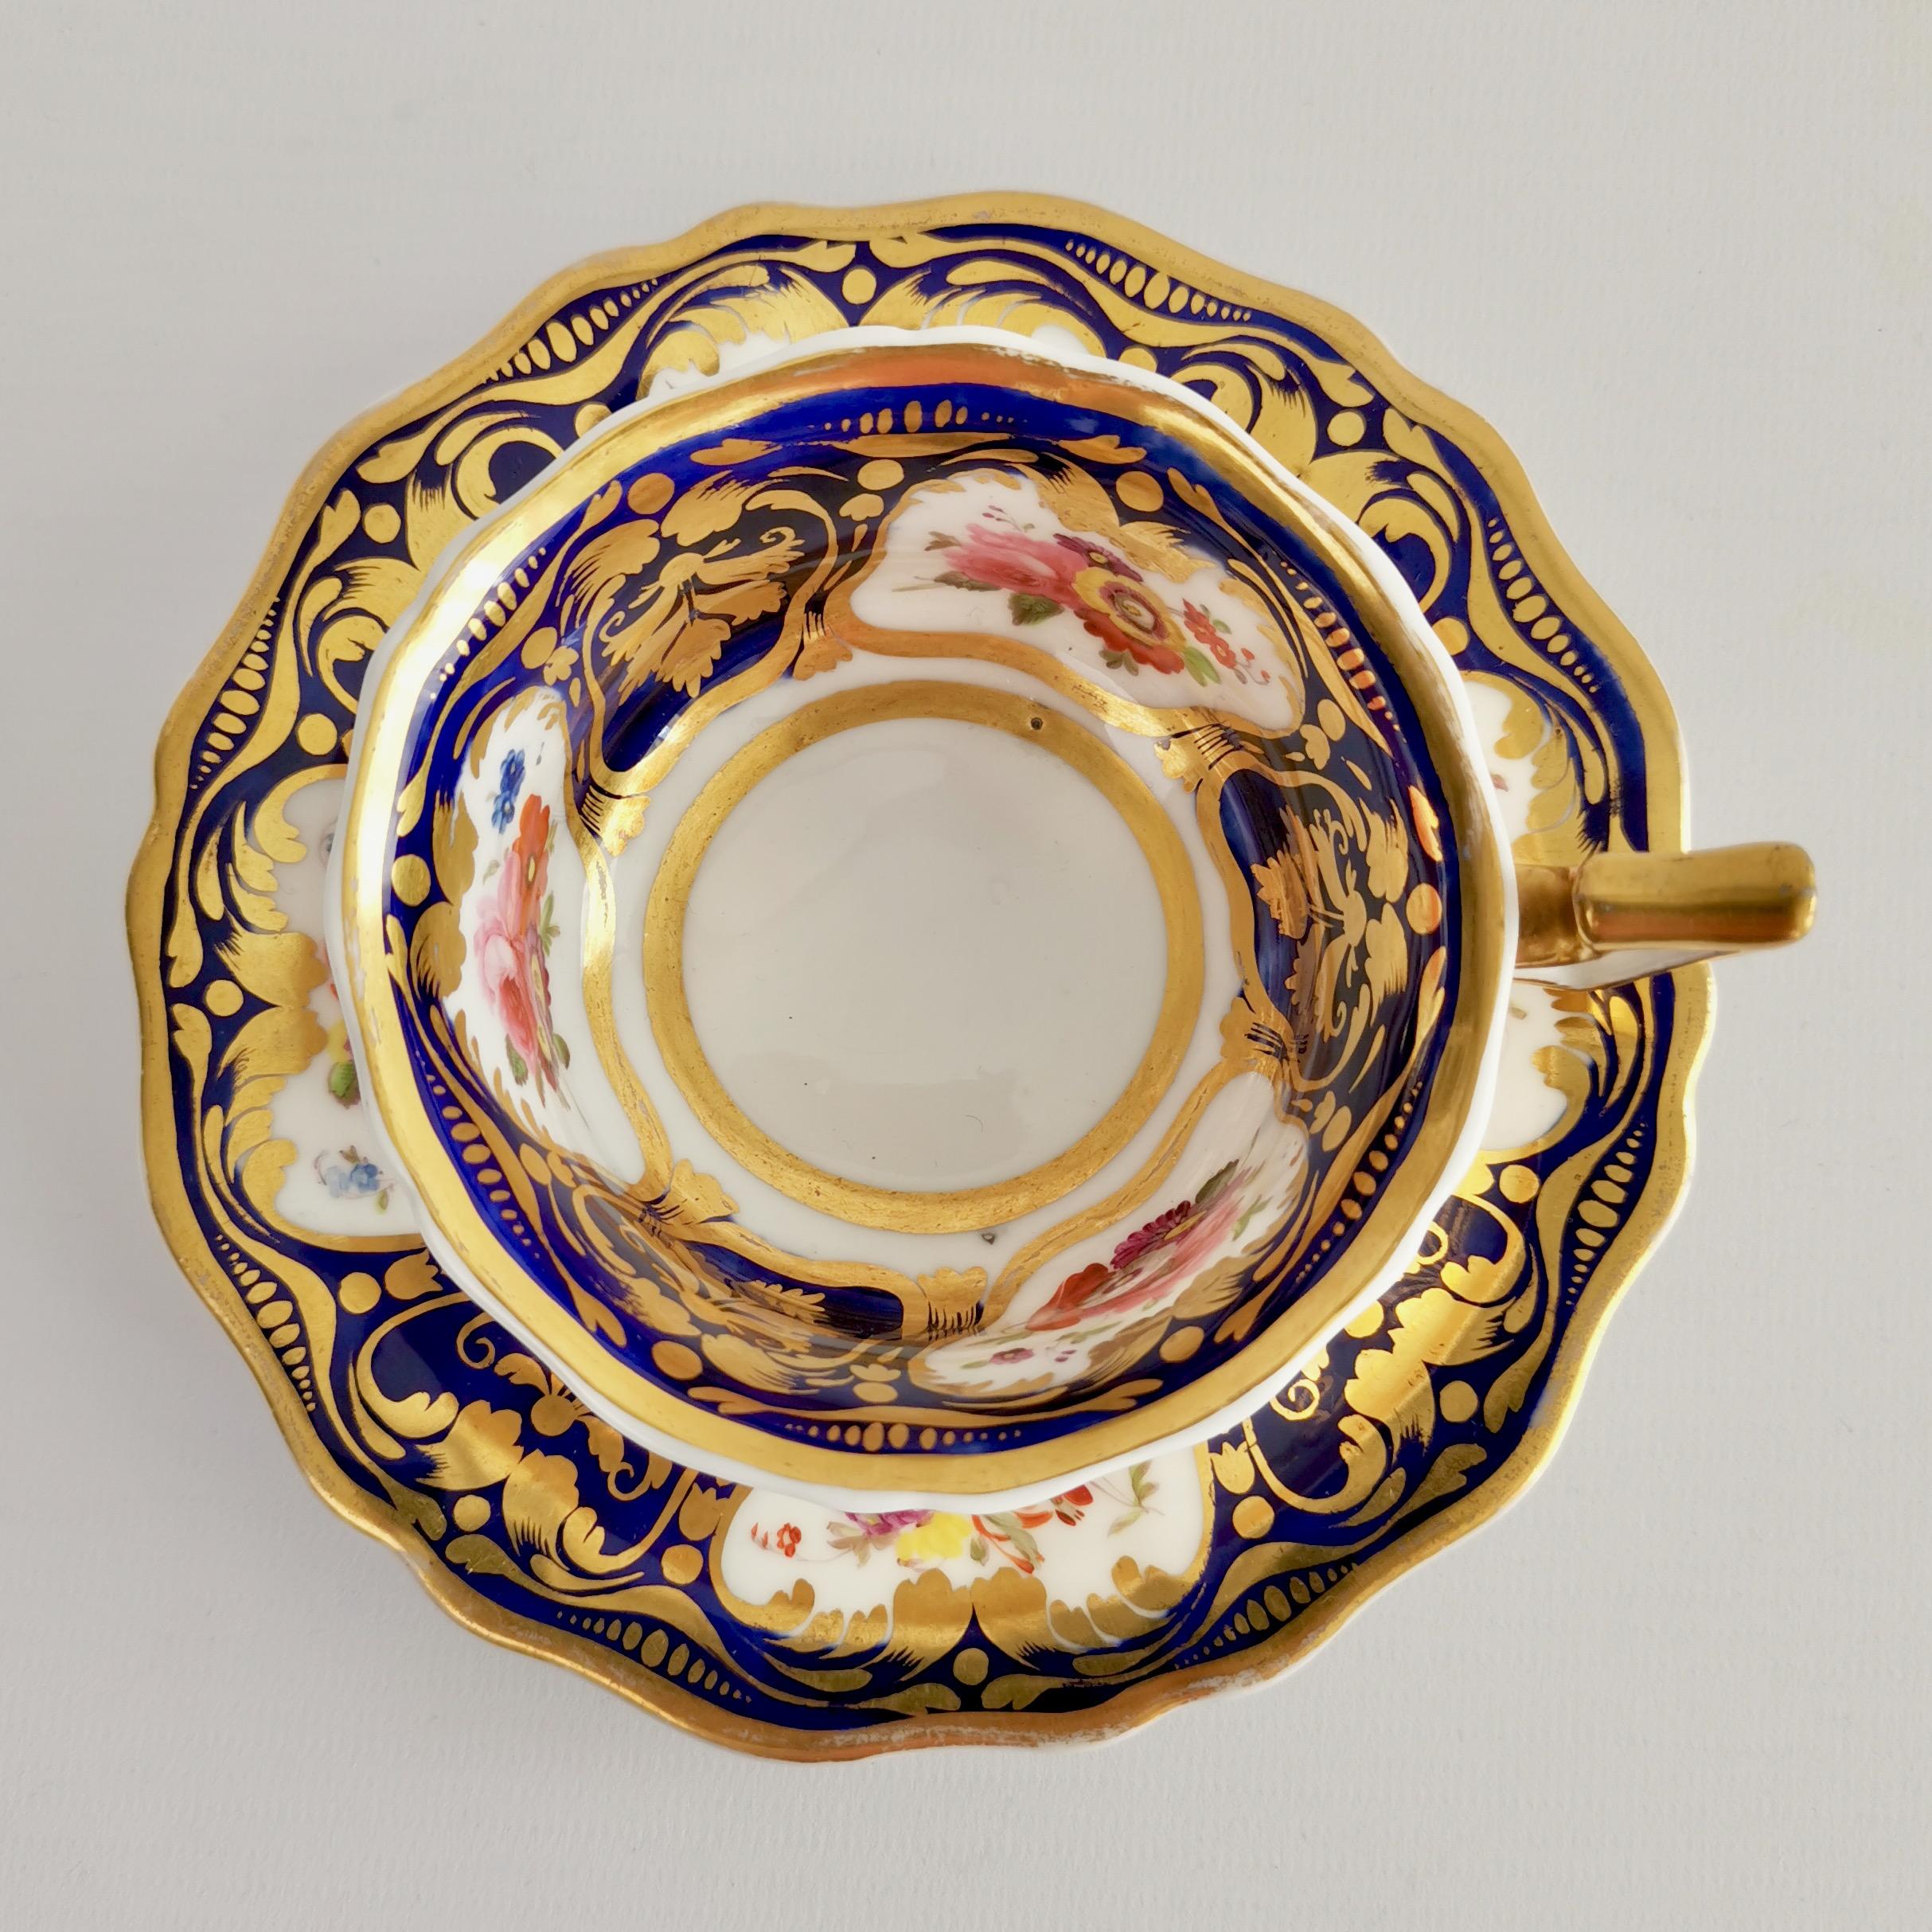 English Ridgway Porcelain Teacup, Cobalt Blue, Gilt and Flowers, Regency ca 1825